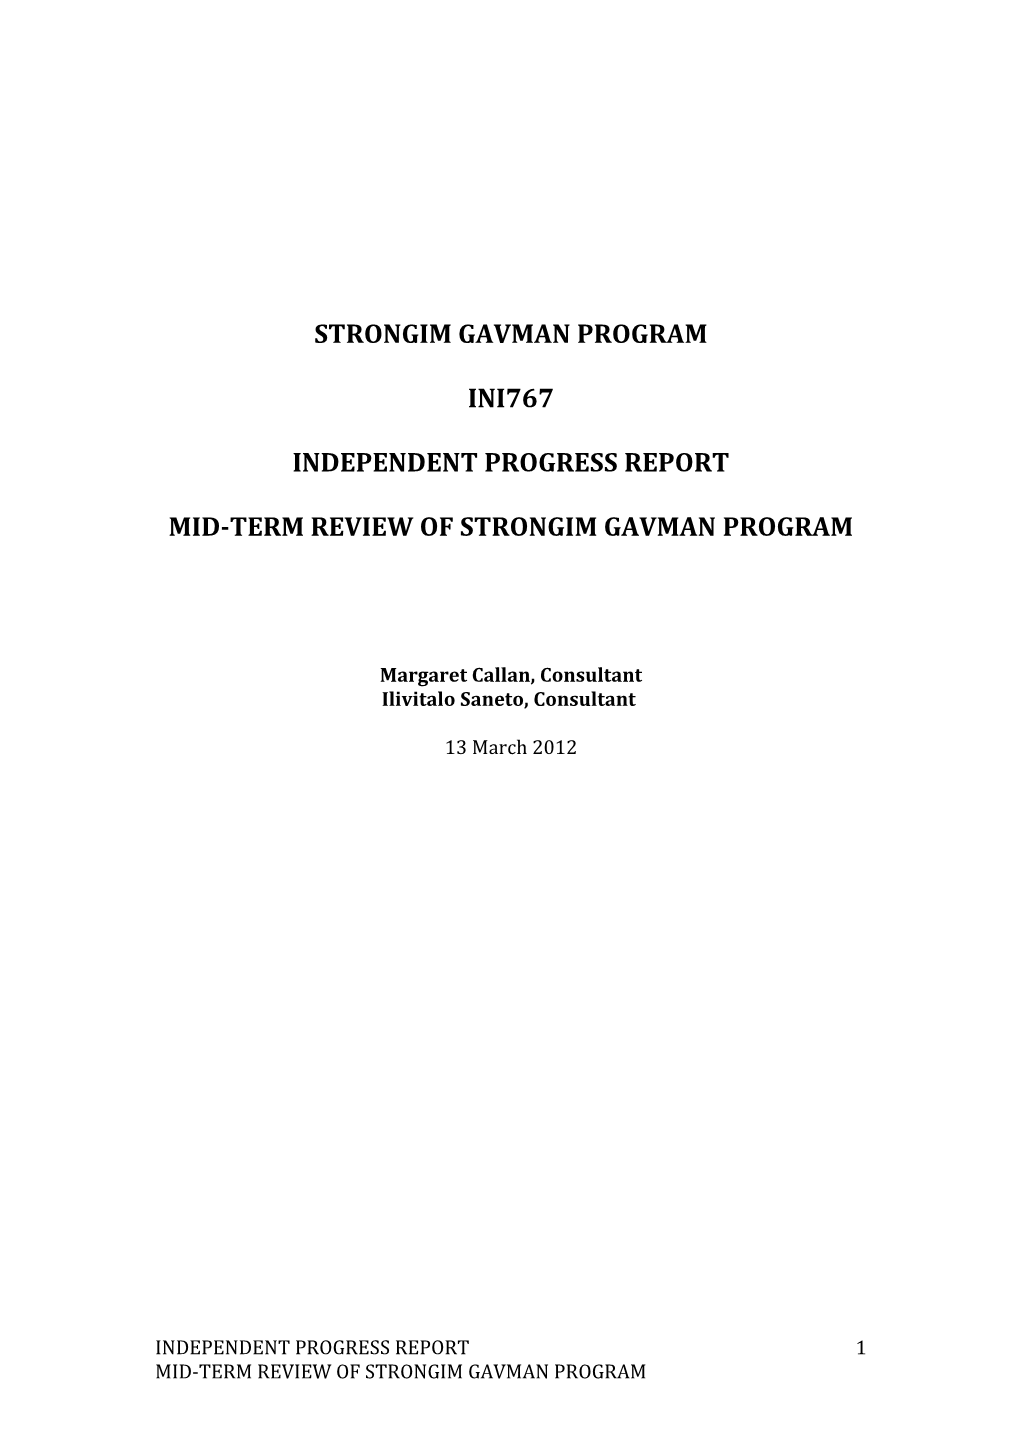 Mid-Term Review of Strongim Gavman Program